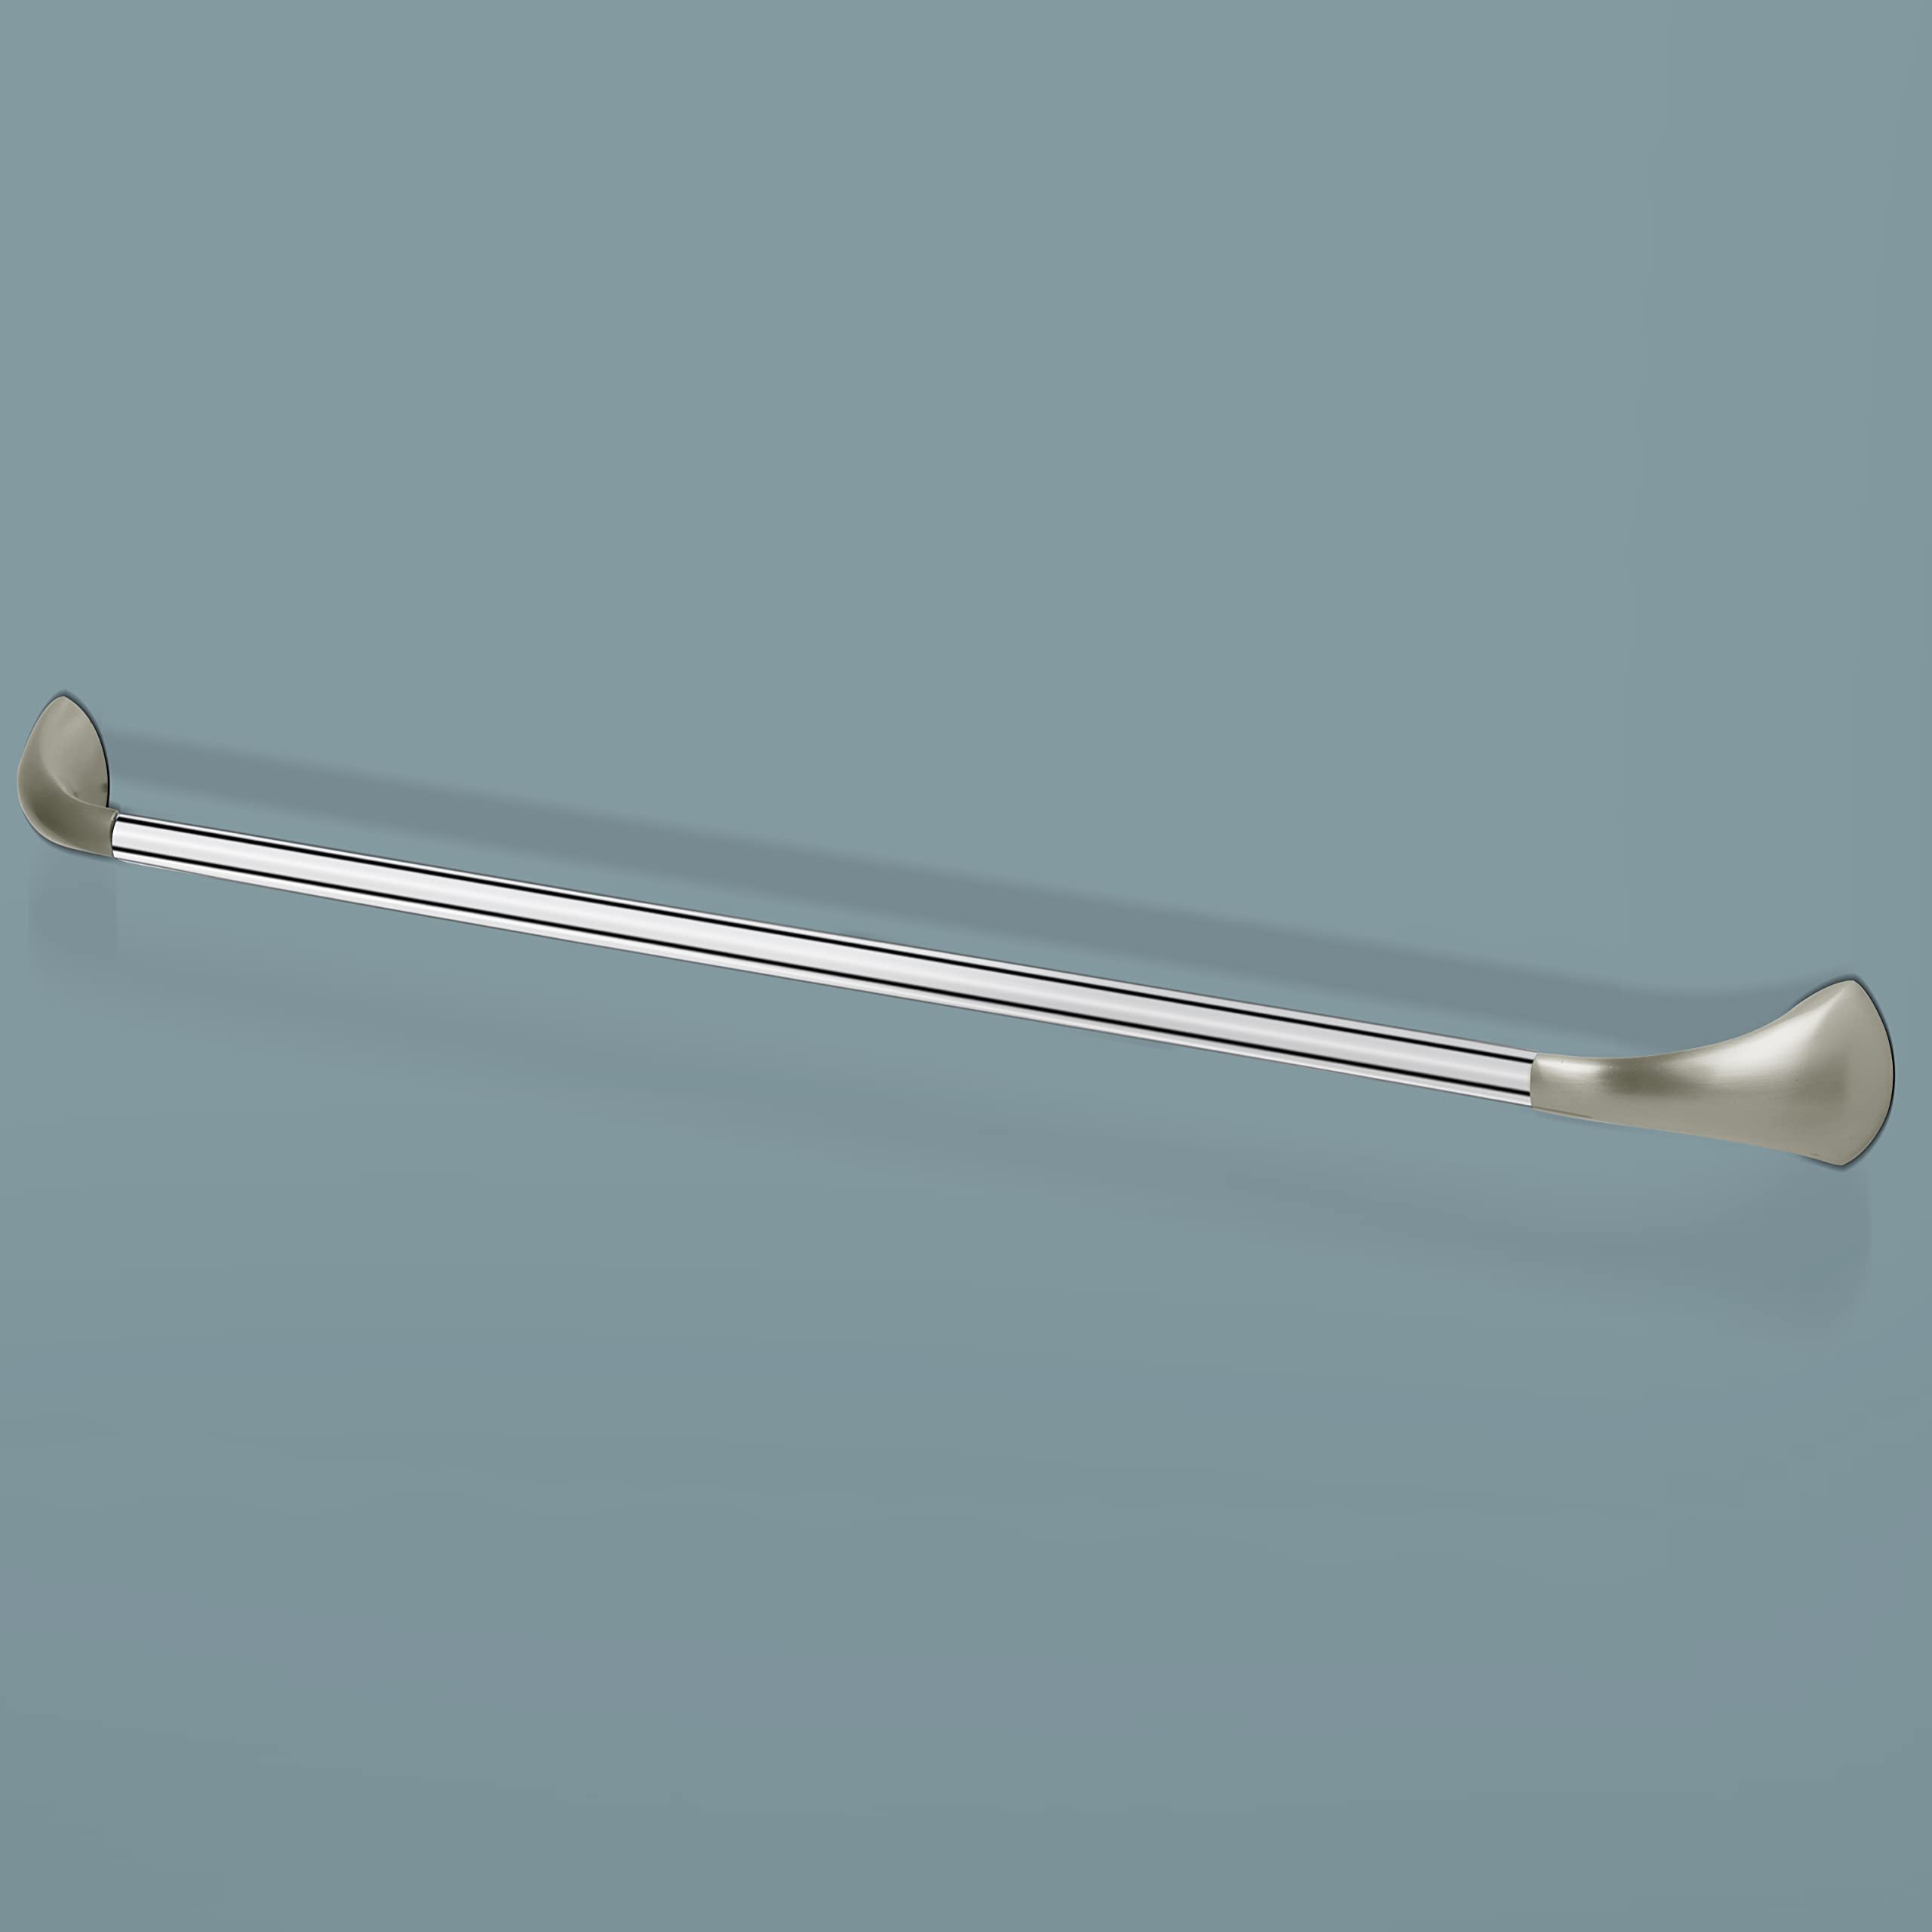 Plantex Fully Brass Smero Towel Rod for Bathroom/Towel Stand/Hanger/Bathroom Accessories - 24 Inch,Chrome/Satin (EF-4132-B)